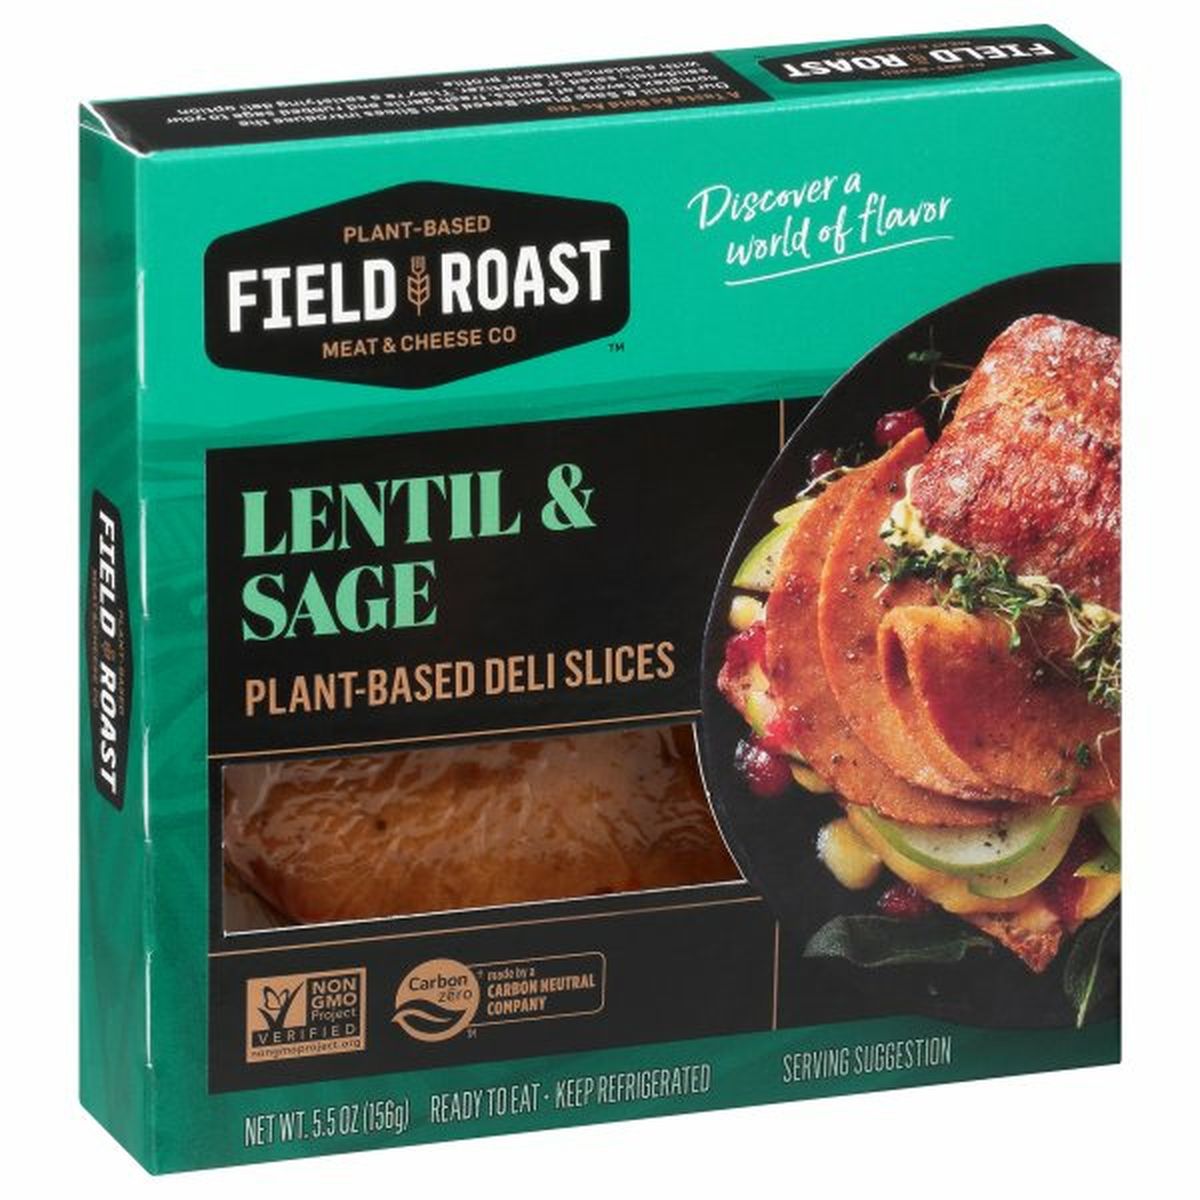 Calories in Field Roast Deli Slices, Lentil & Sage, Plant-Based